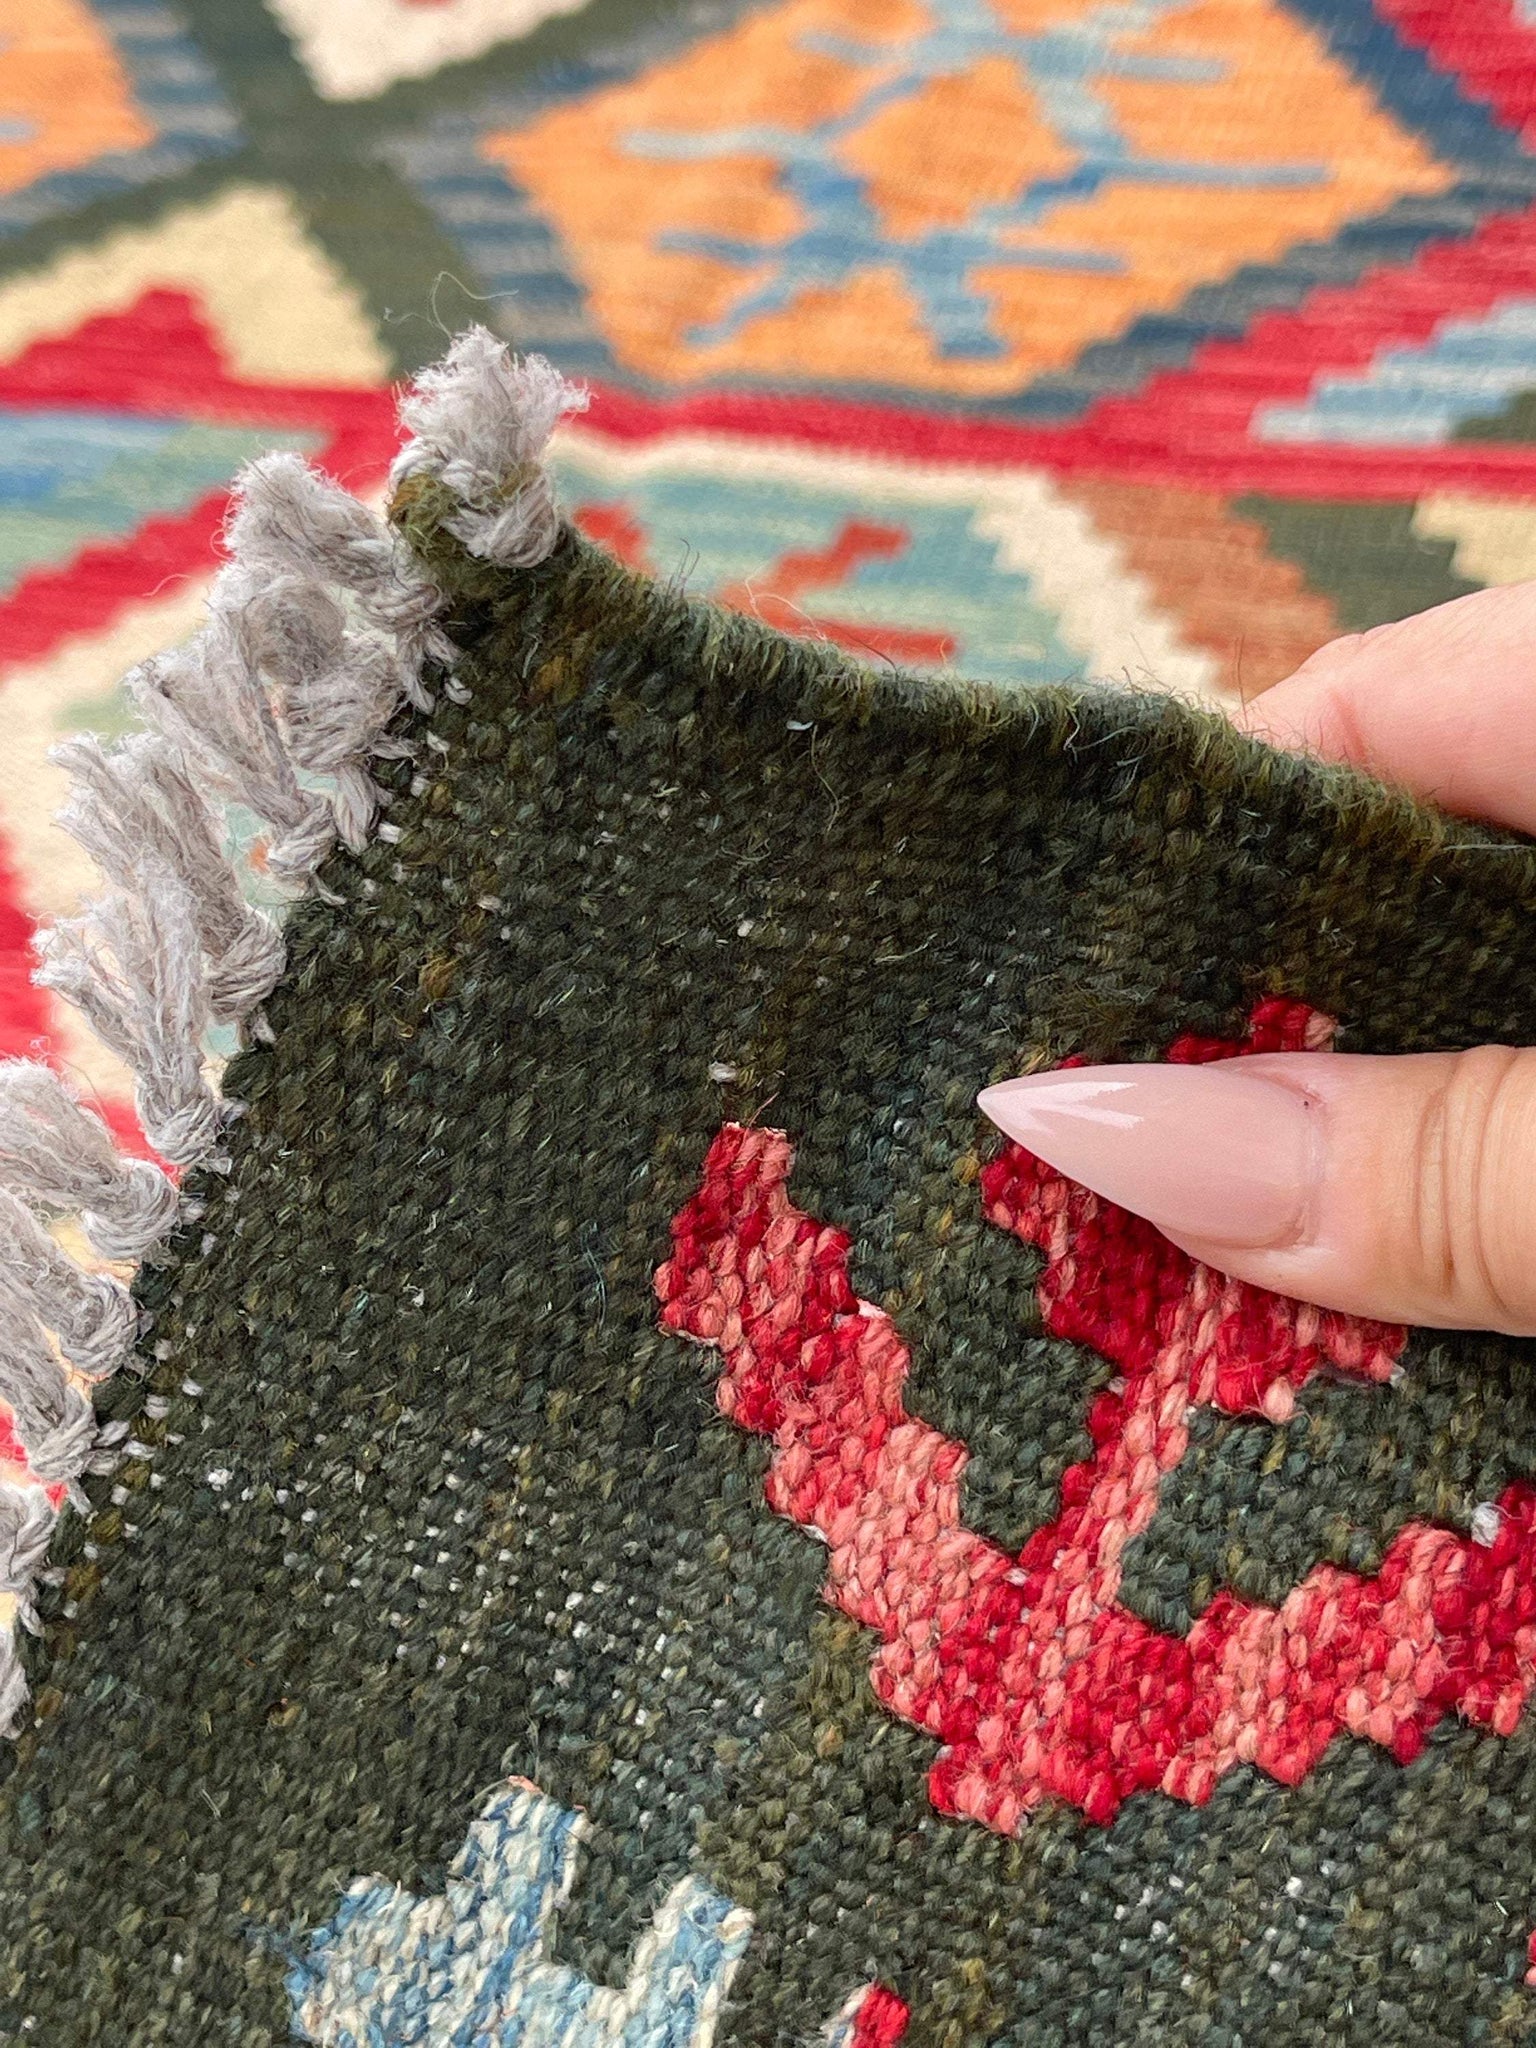 7x10 (215x305) Handmade Afghan Kilim Flatweave Rug | Orange Brown Red Green | Boho Tribal Moroccan Outdoor Wool Knotted Woven Turkish Oushak